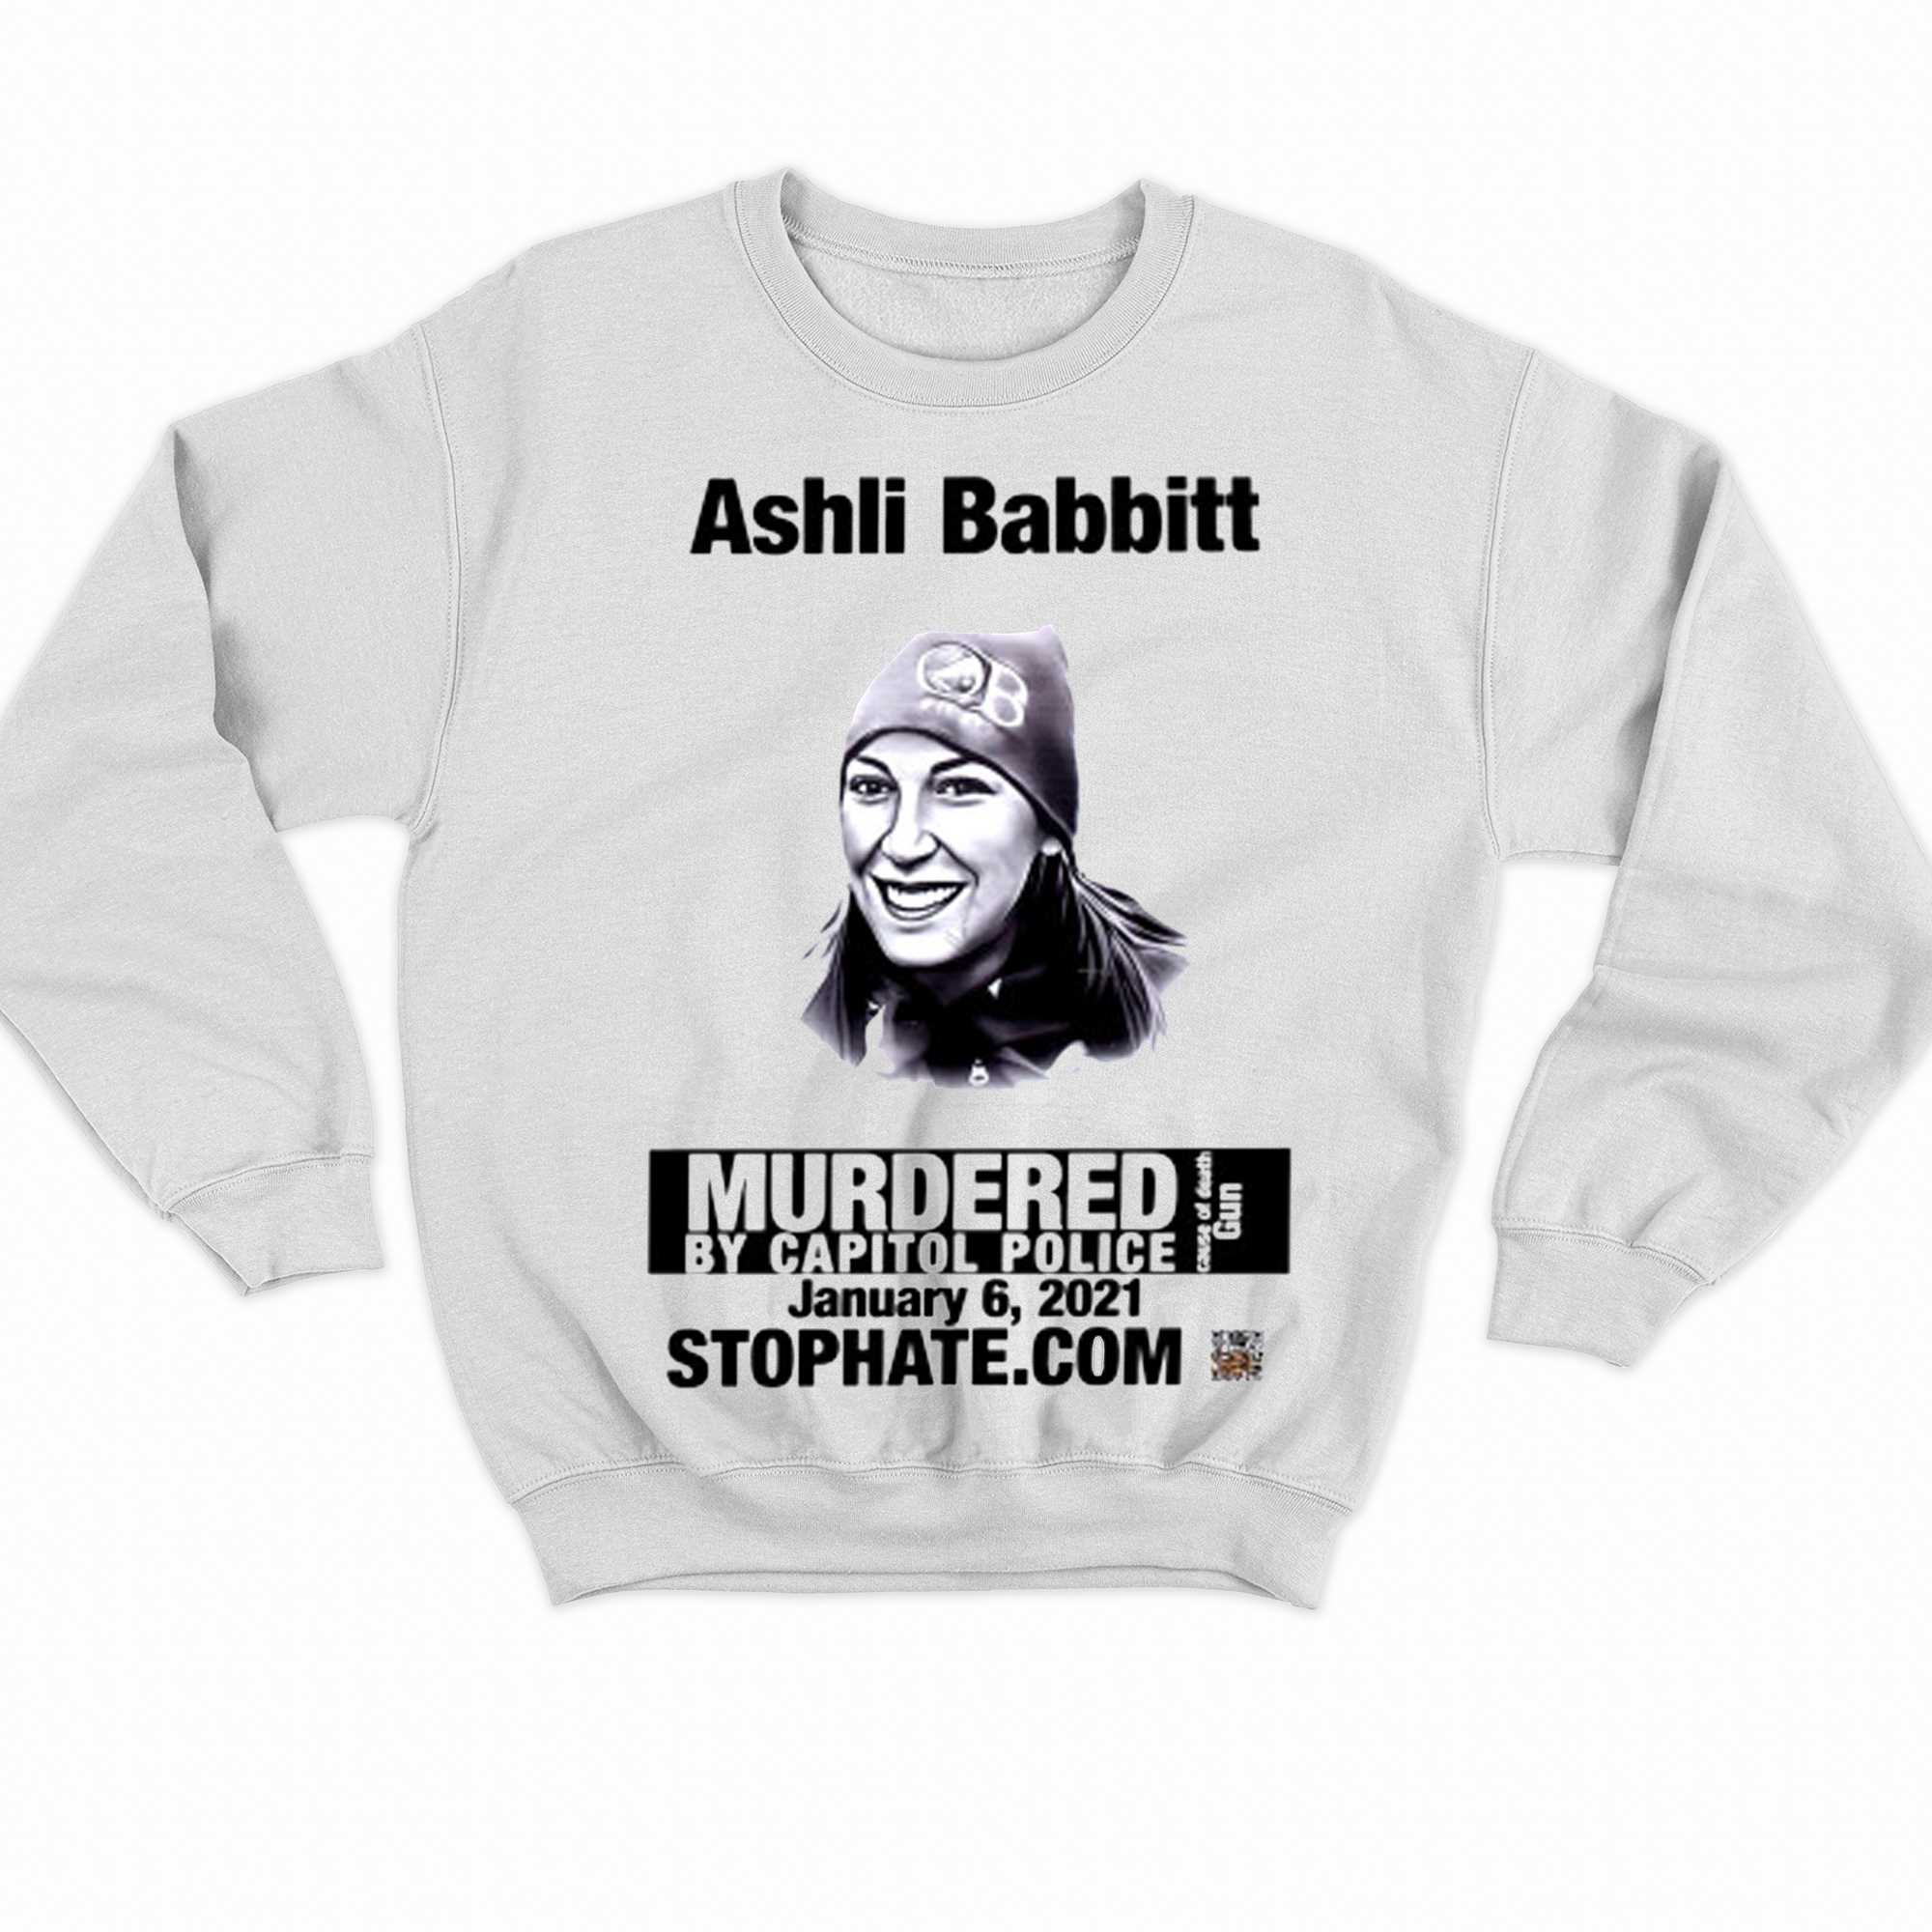 Official Ashli Babbitt Murdered By Capitol Police T-shirt 